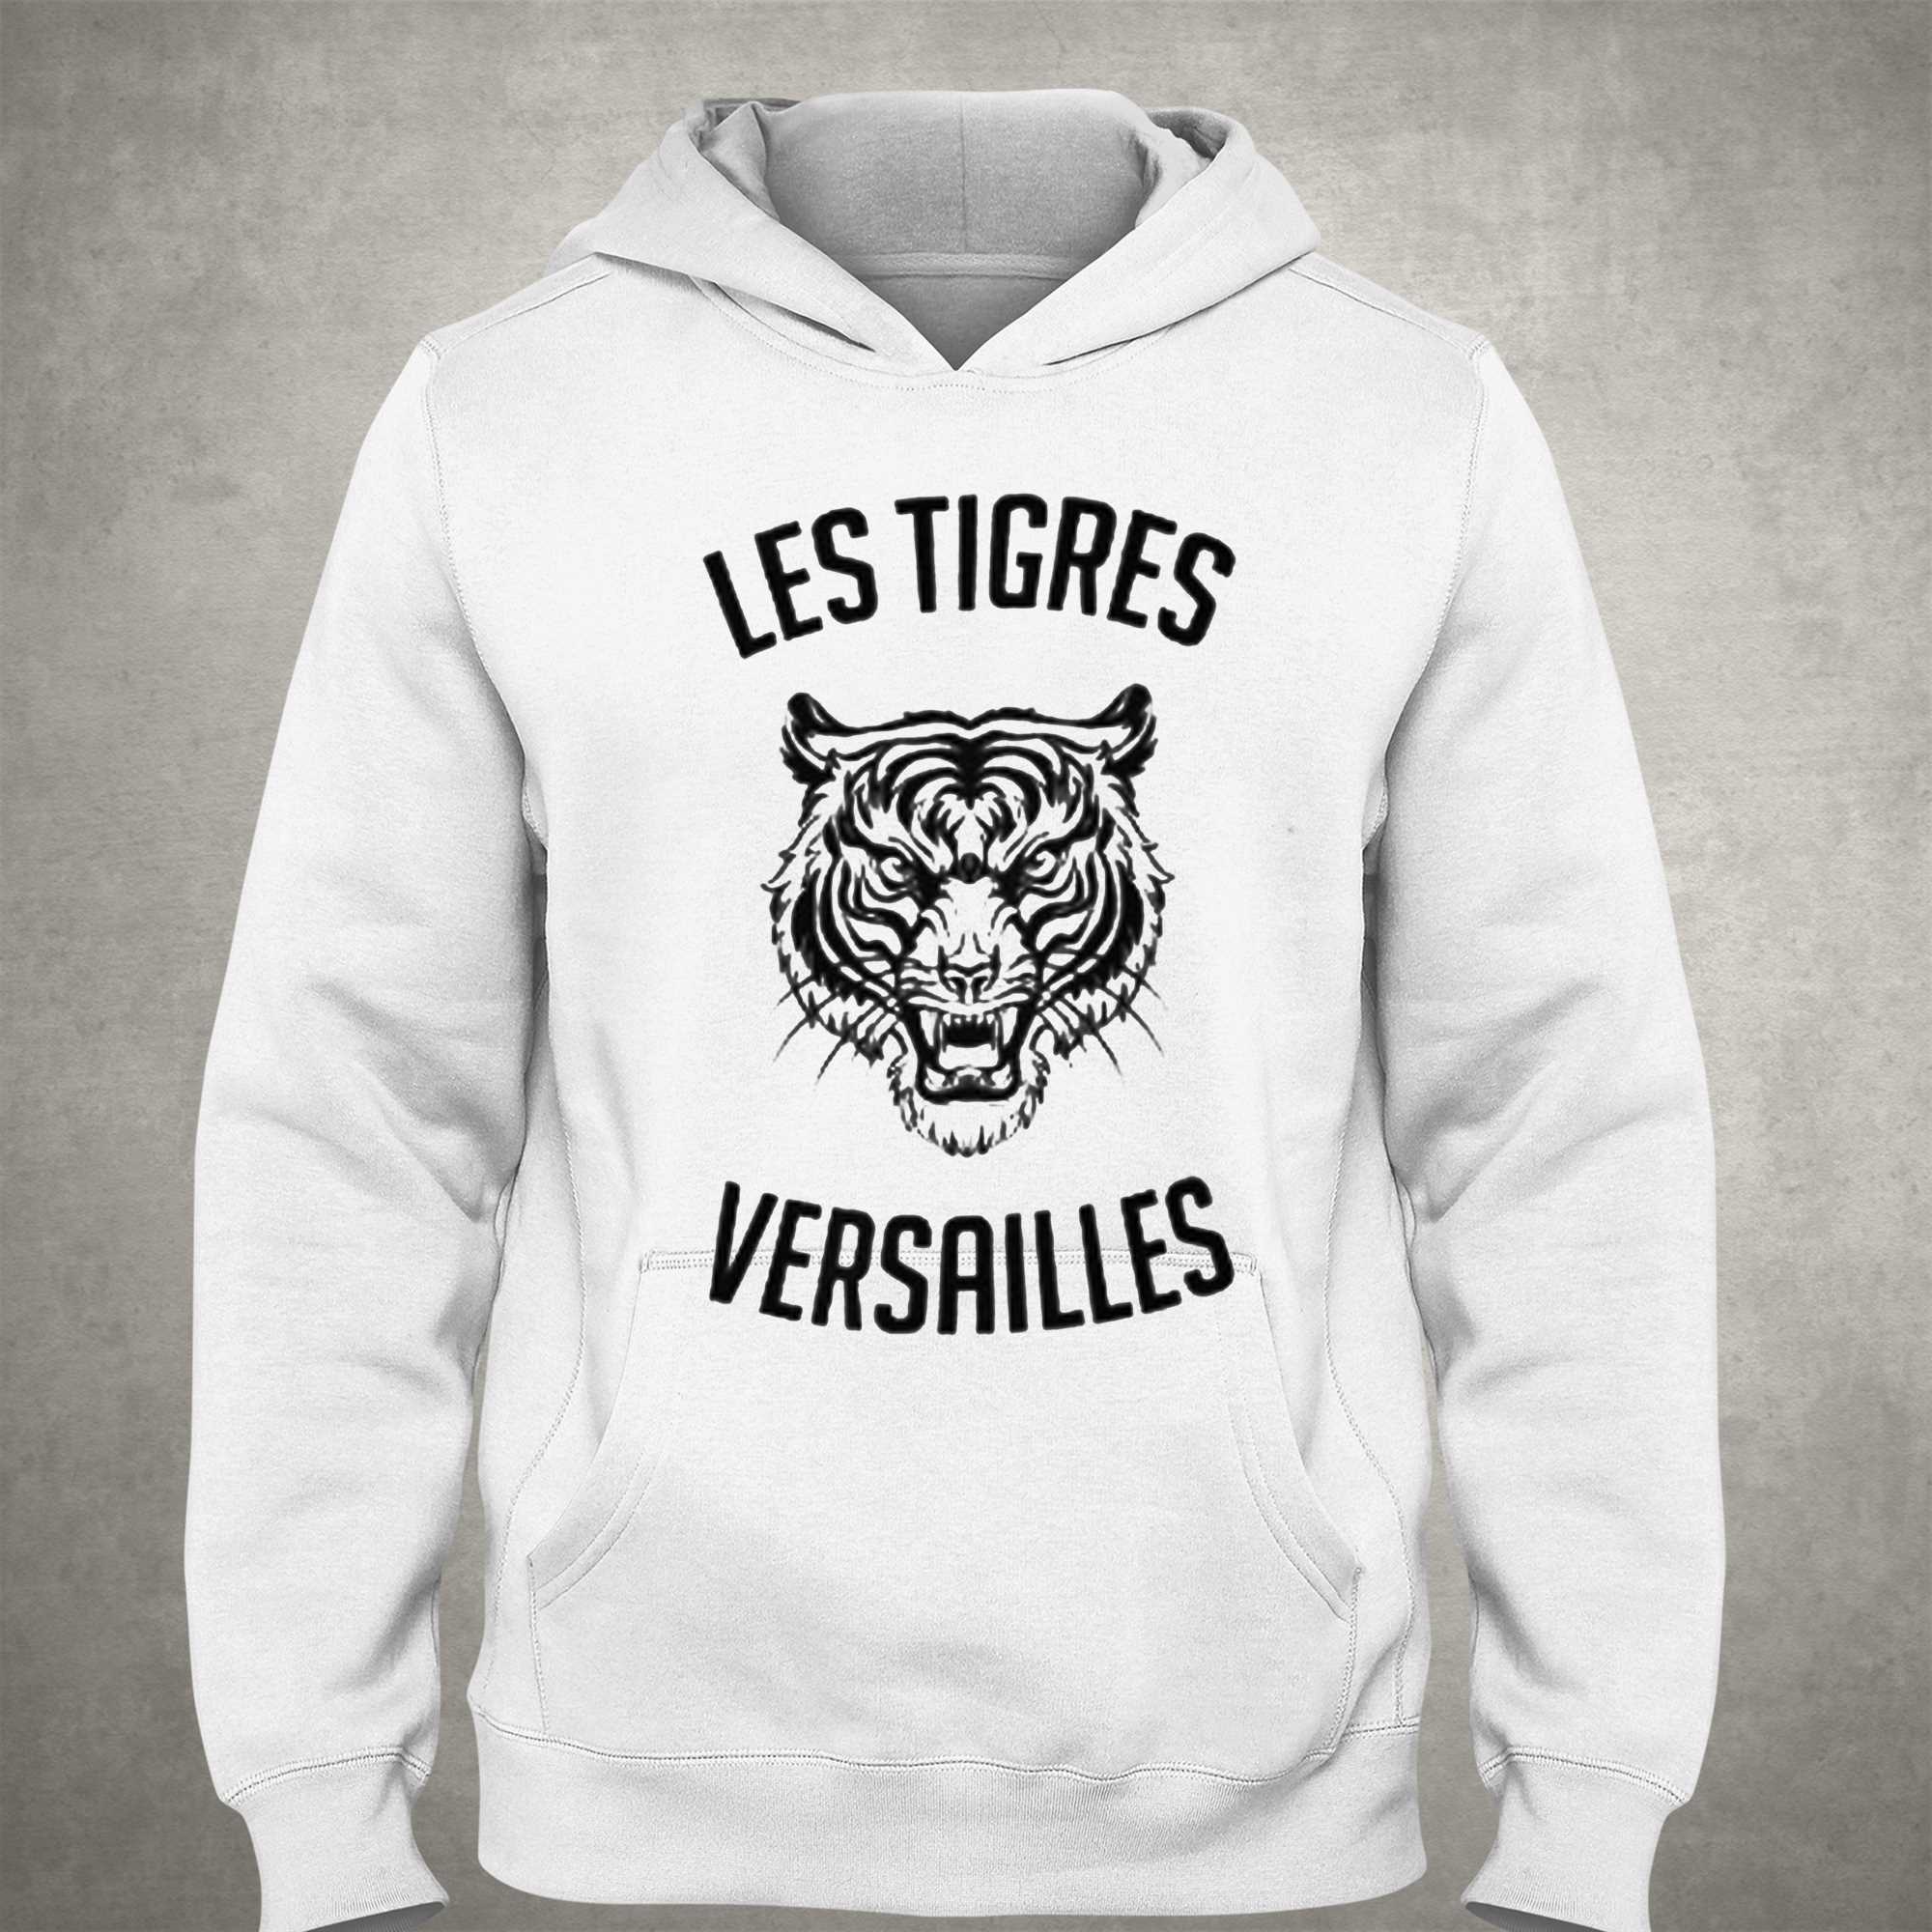 Les Tigres Versailles Sweatshirt Leger - Shibtee Clothing